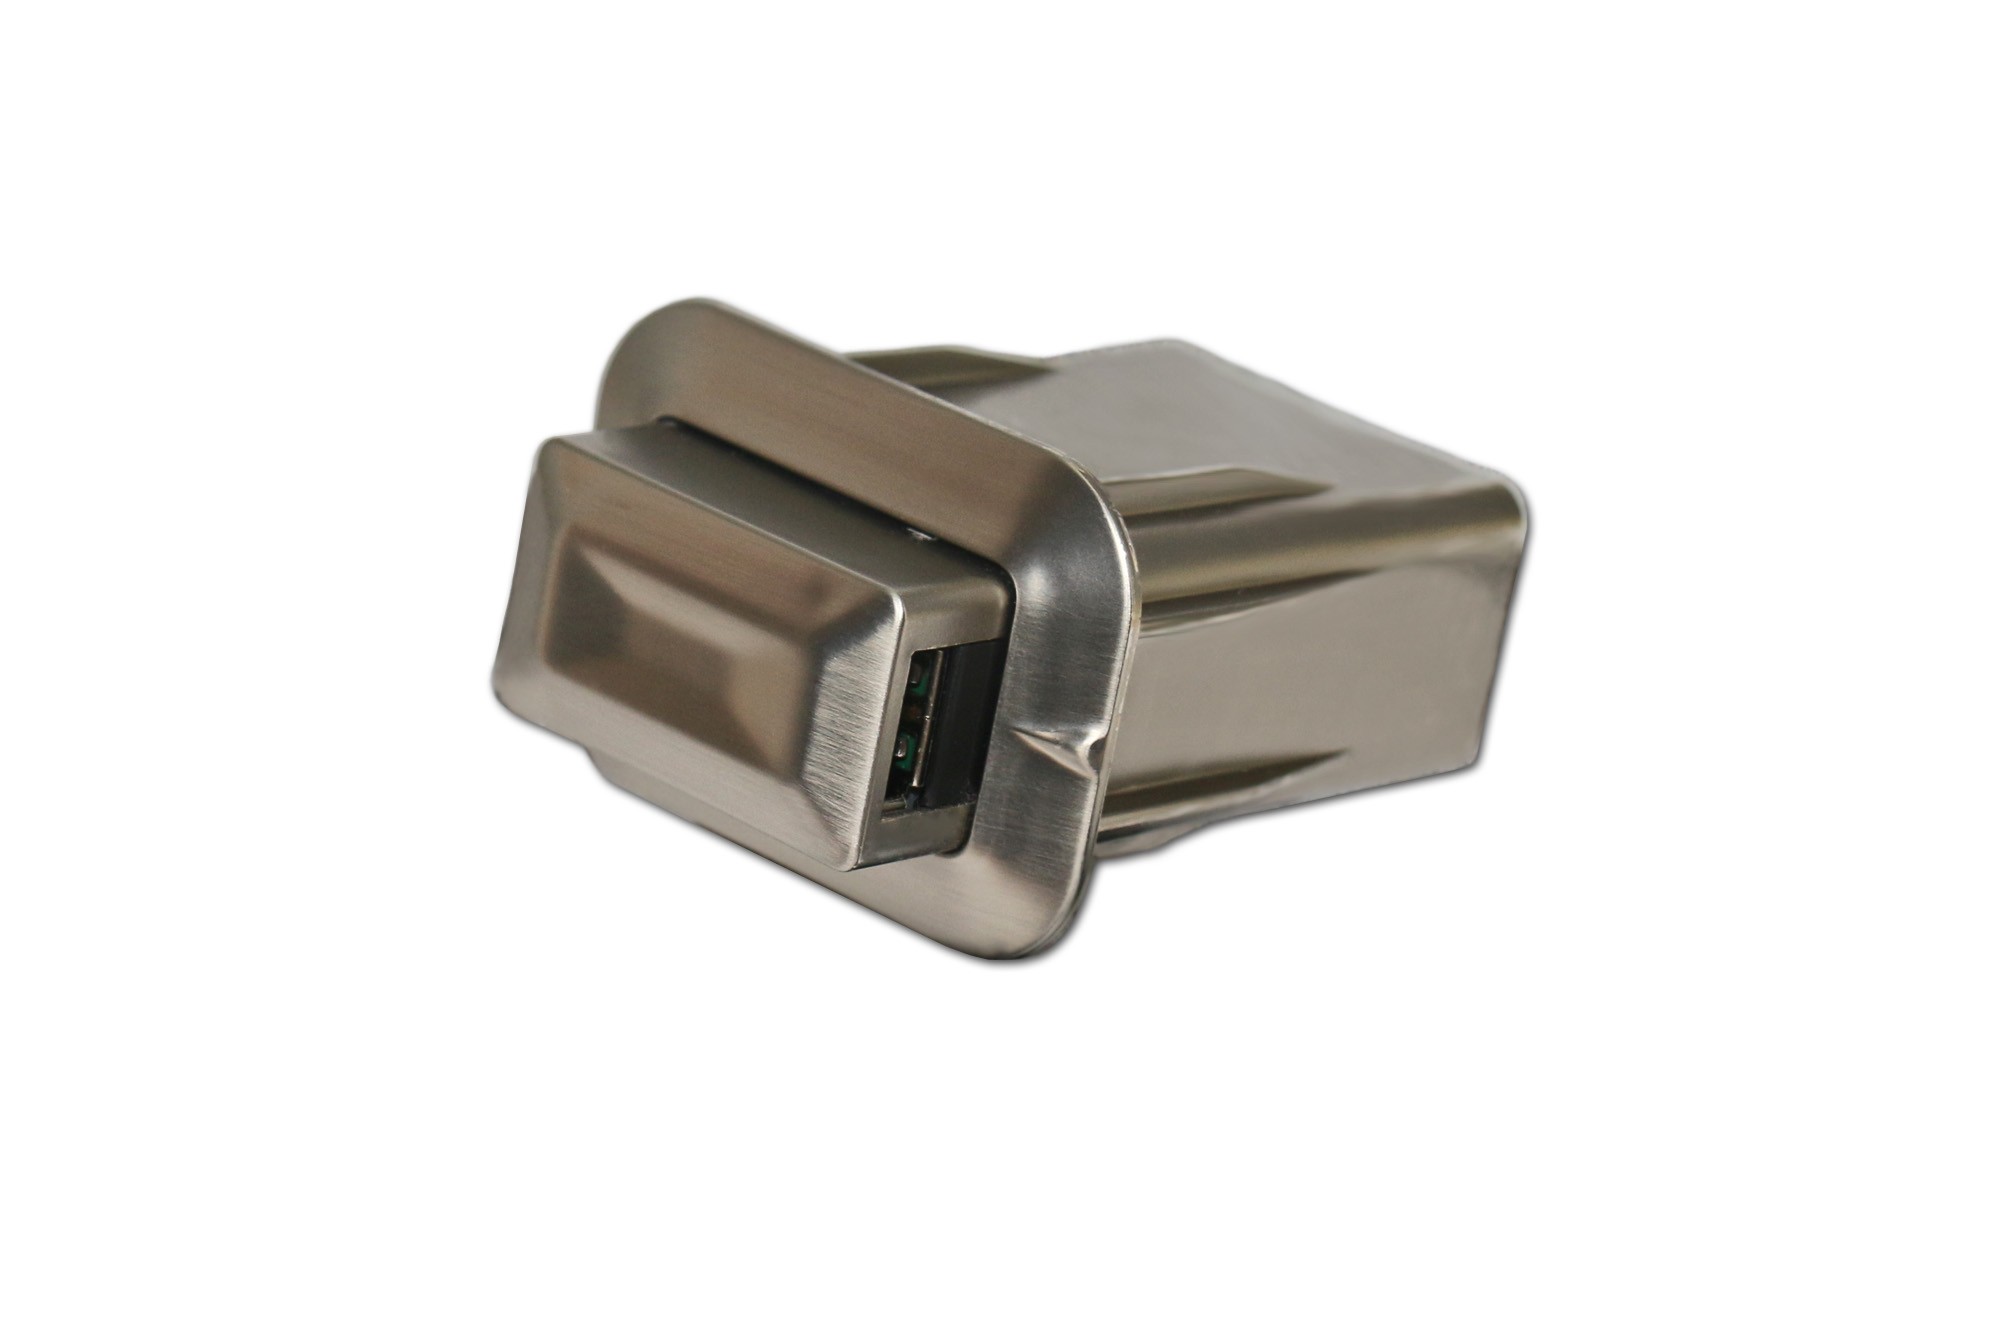 Pop-Up Rectangular Dual Port USB Charger in brushed aluminum